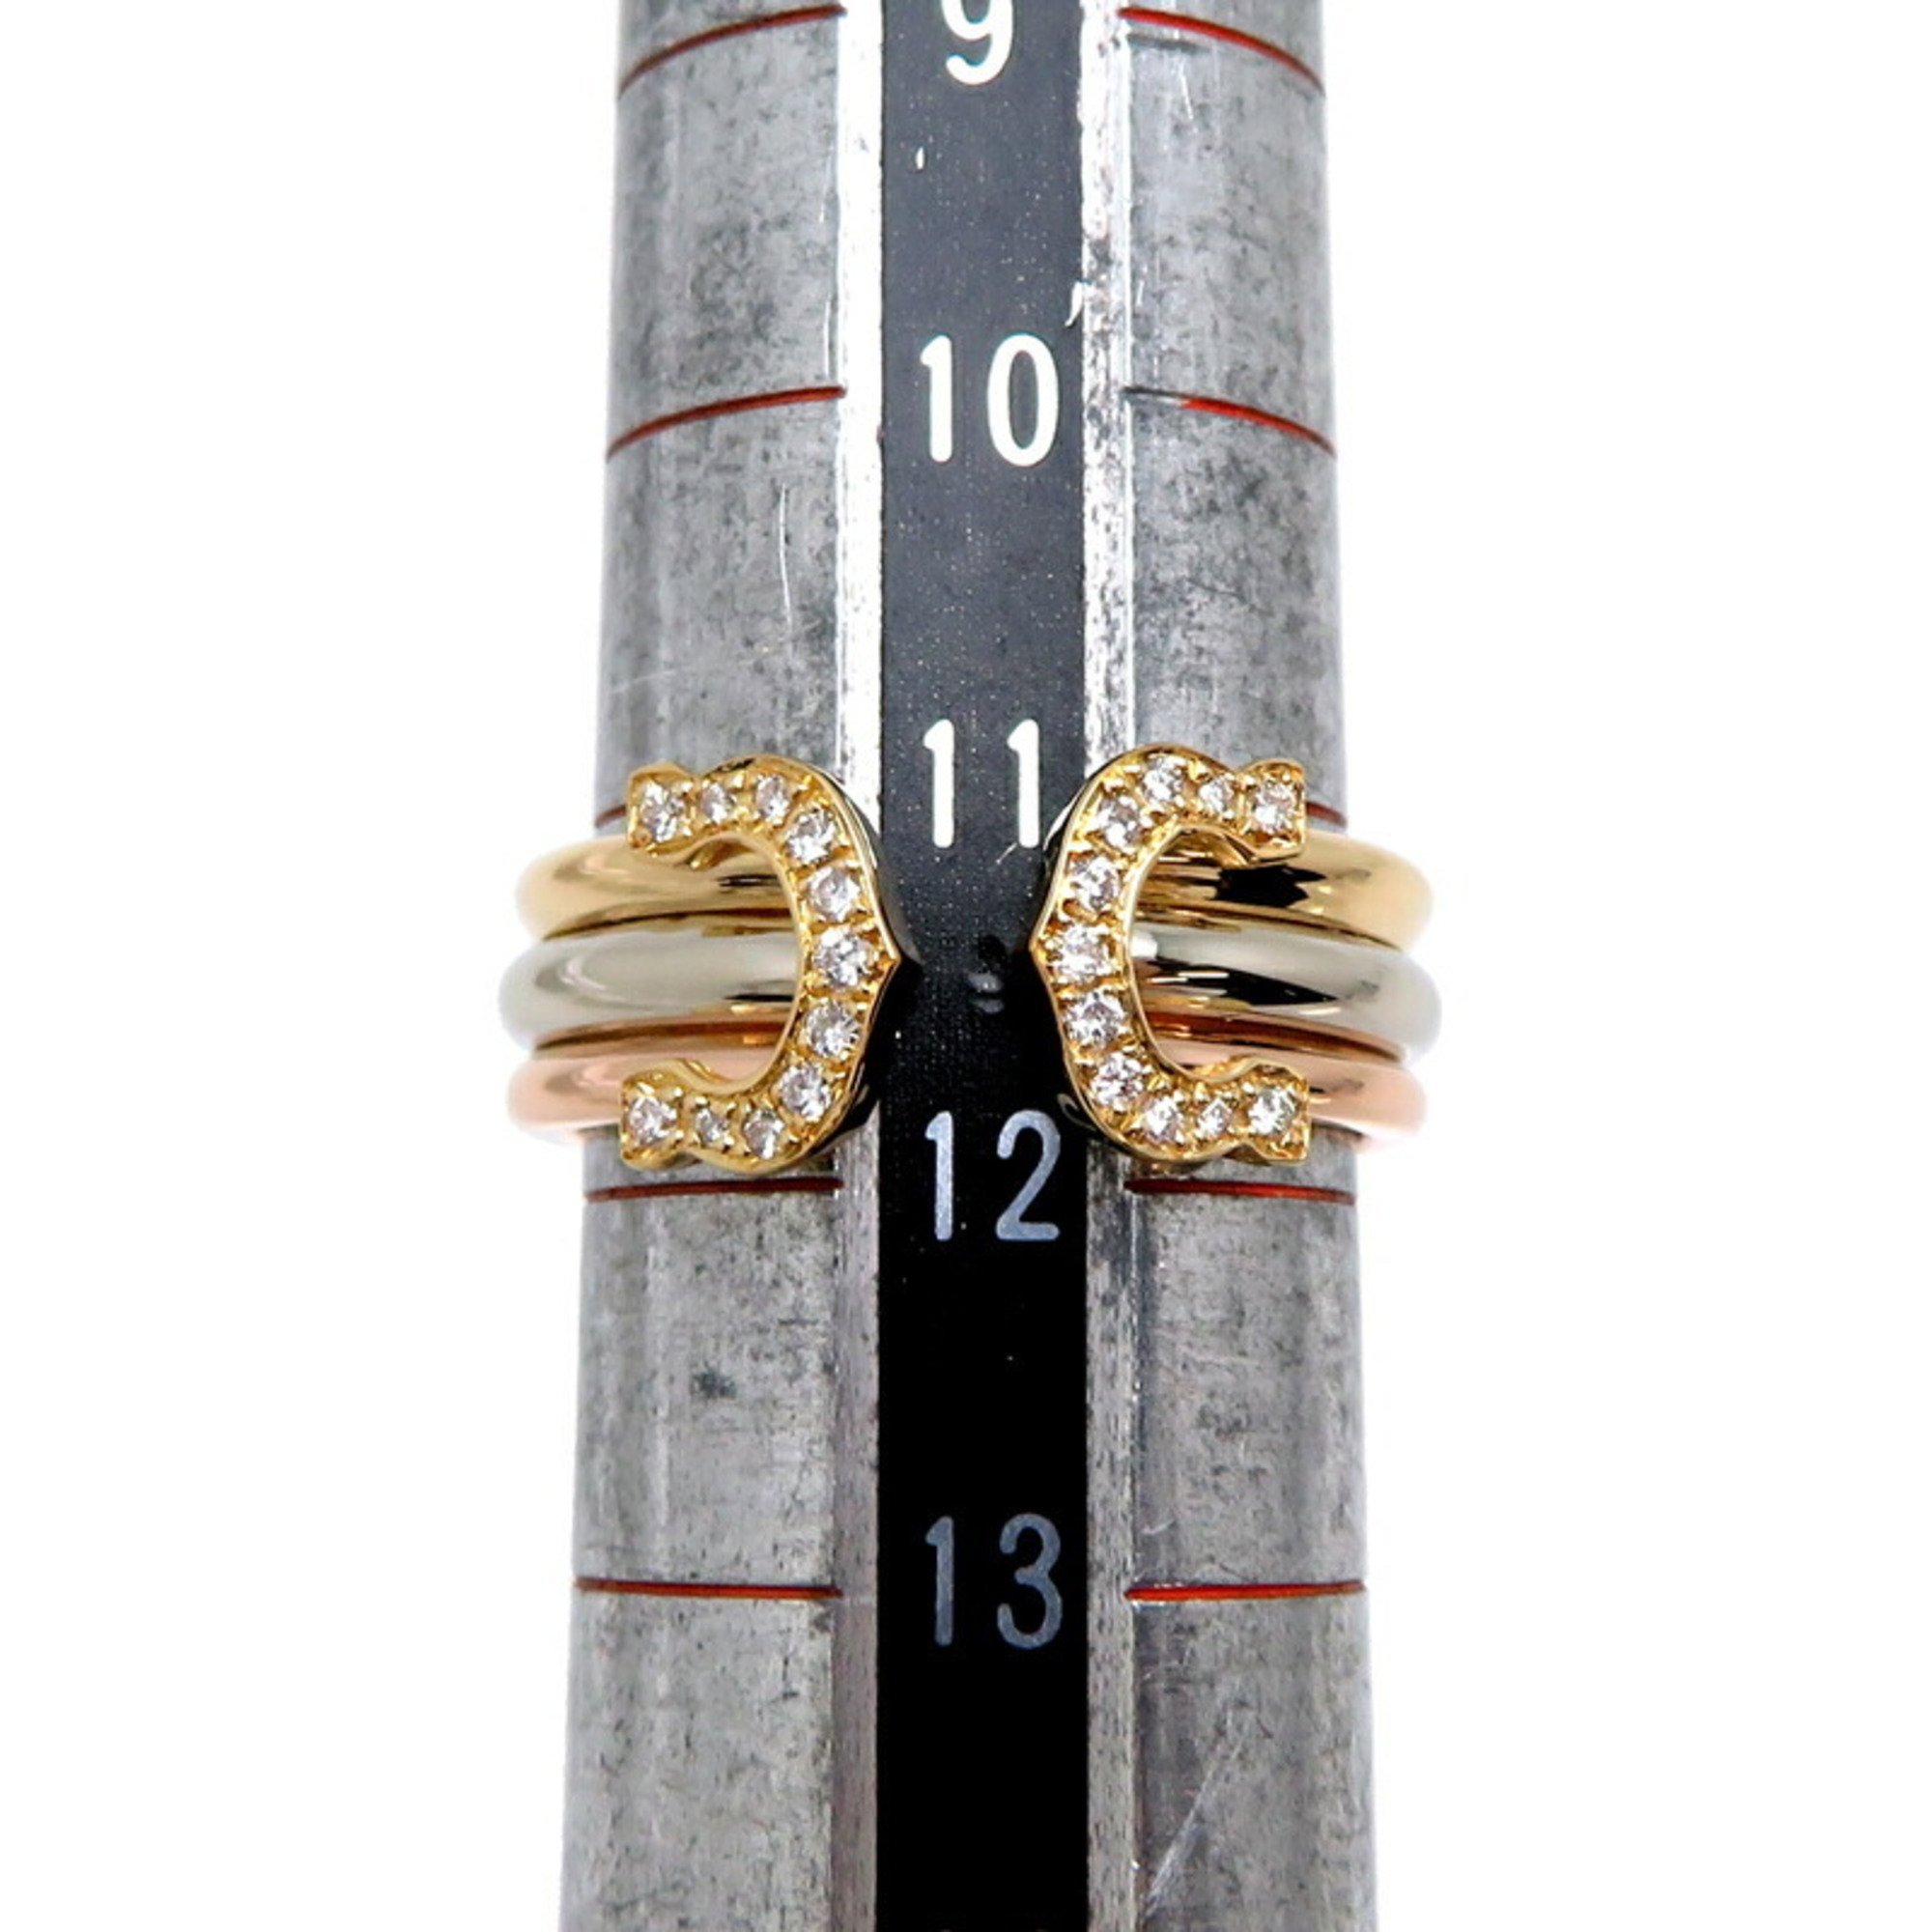 Cartier #51 2C Diamond Ladies Ring, 750 Yellow Gold, Size 11